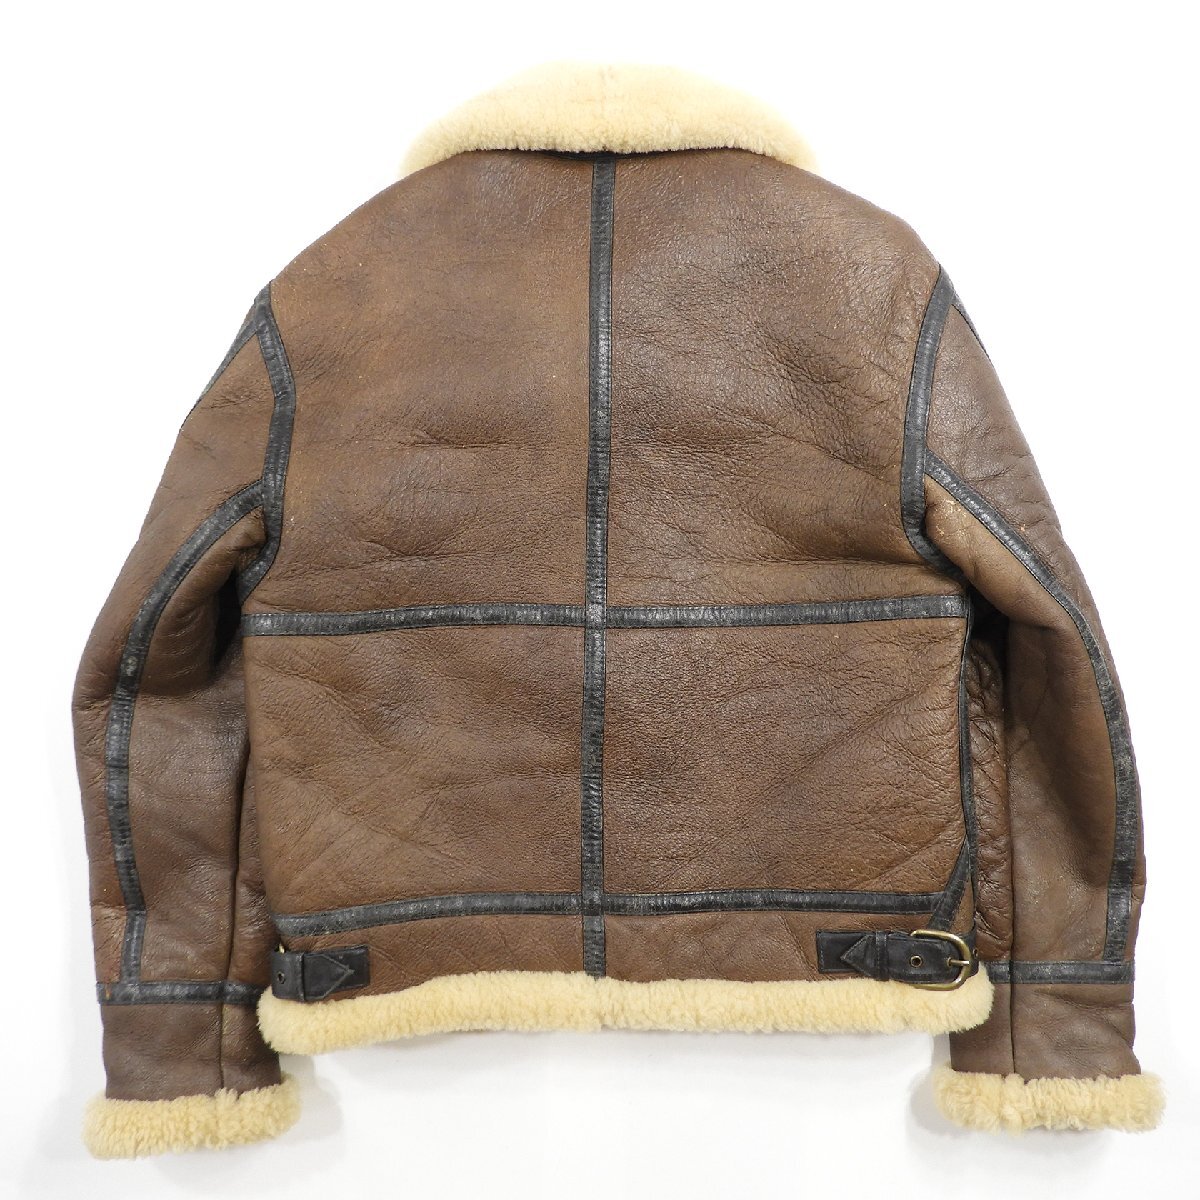 B-3 type mouton jacket Size M #17728 Old American Casual military sheepskin flight jacket 